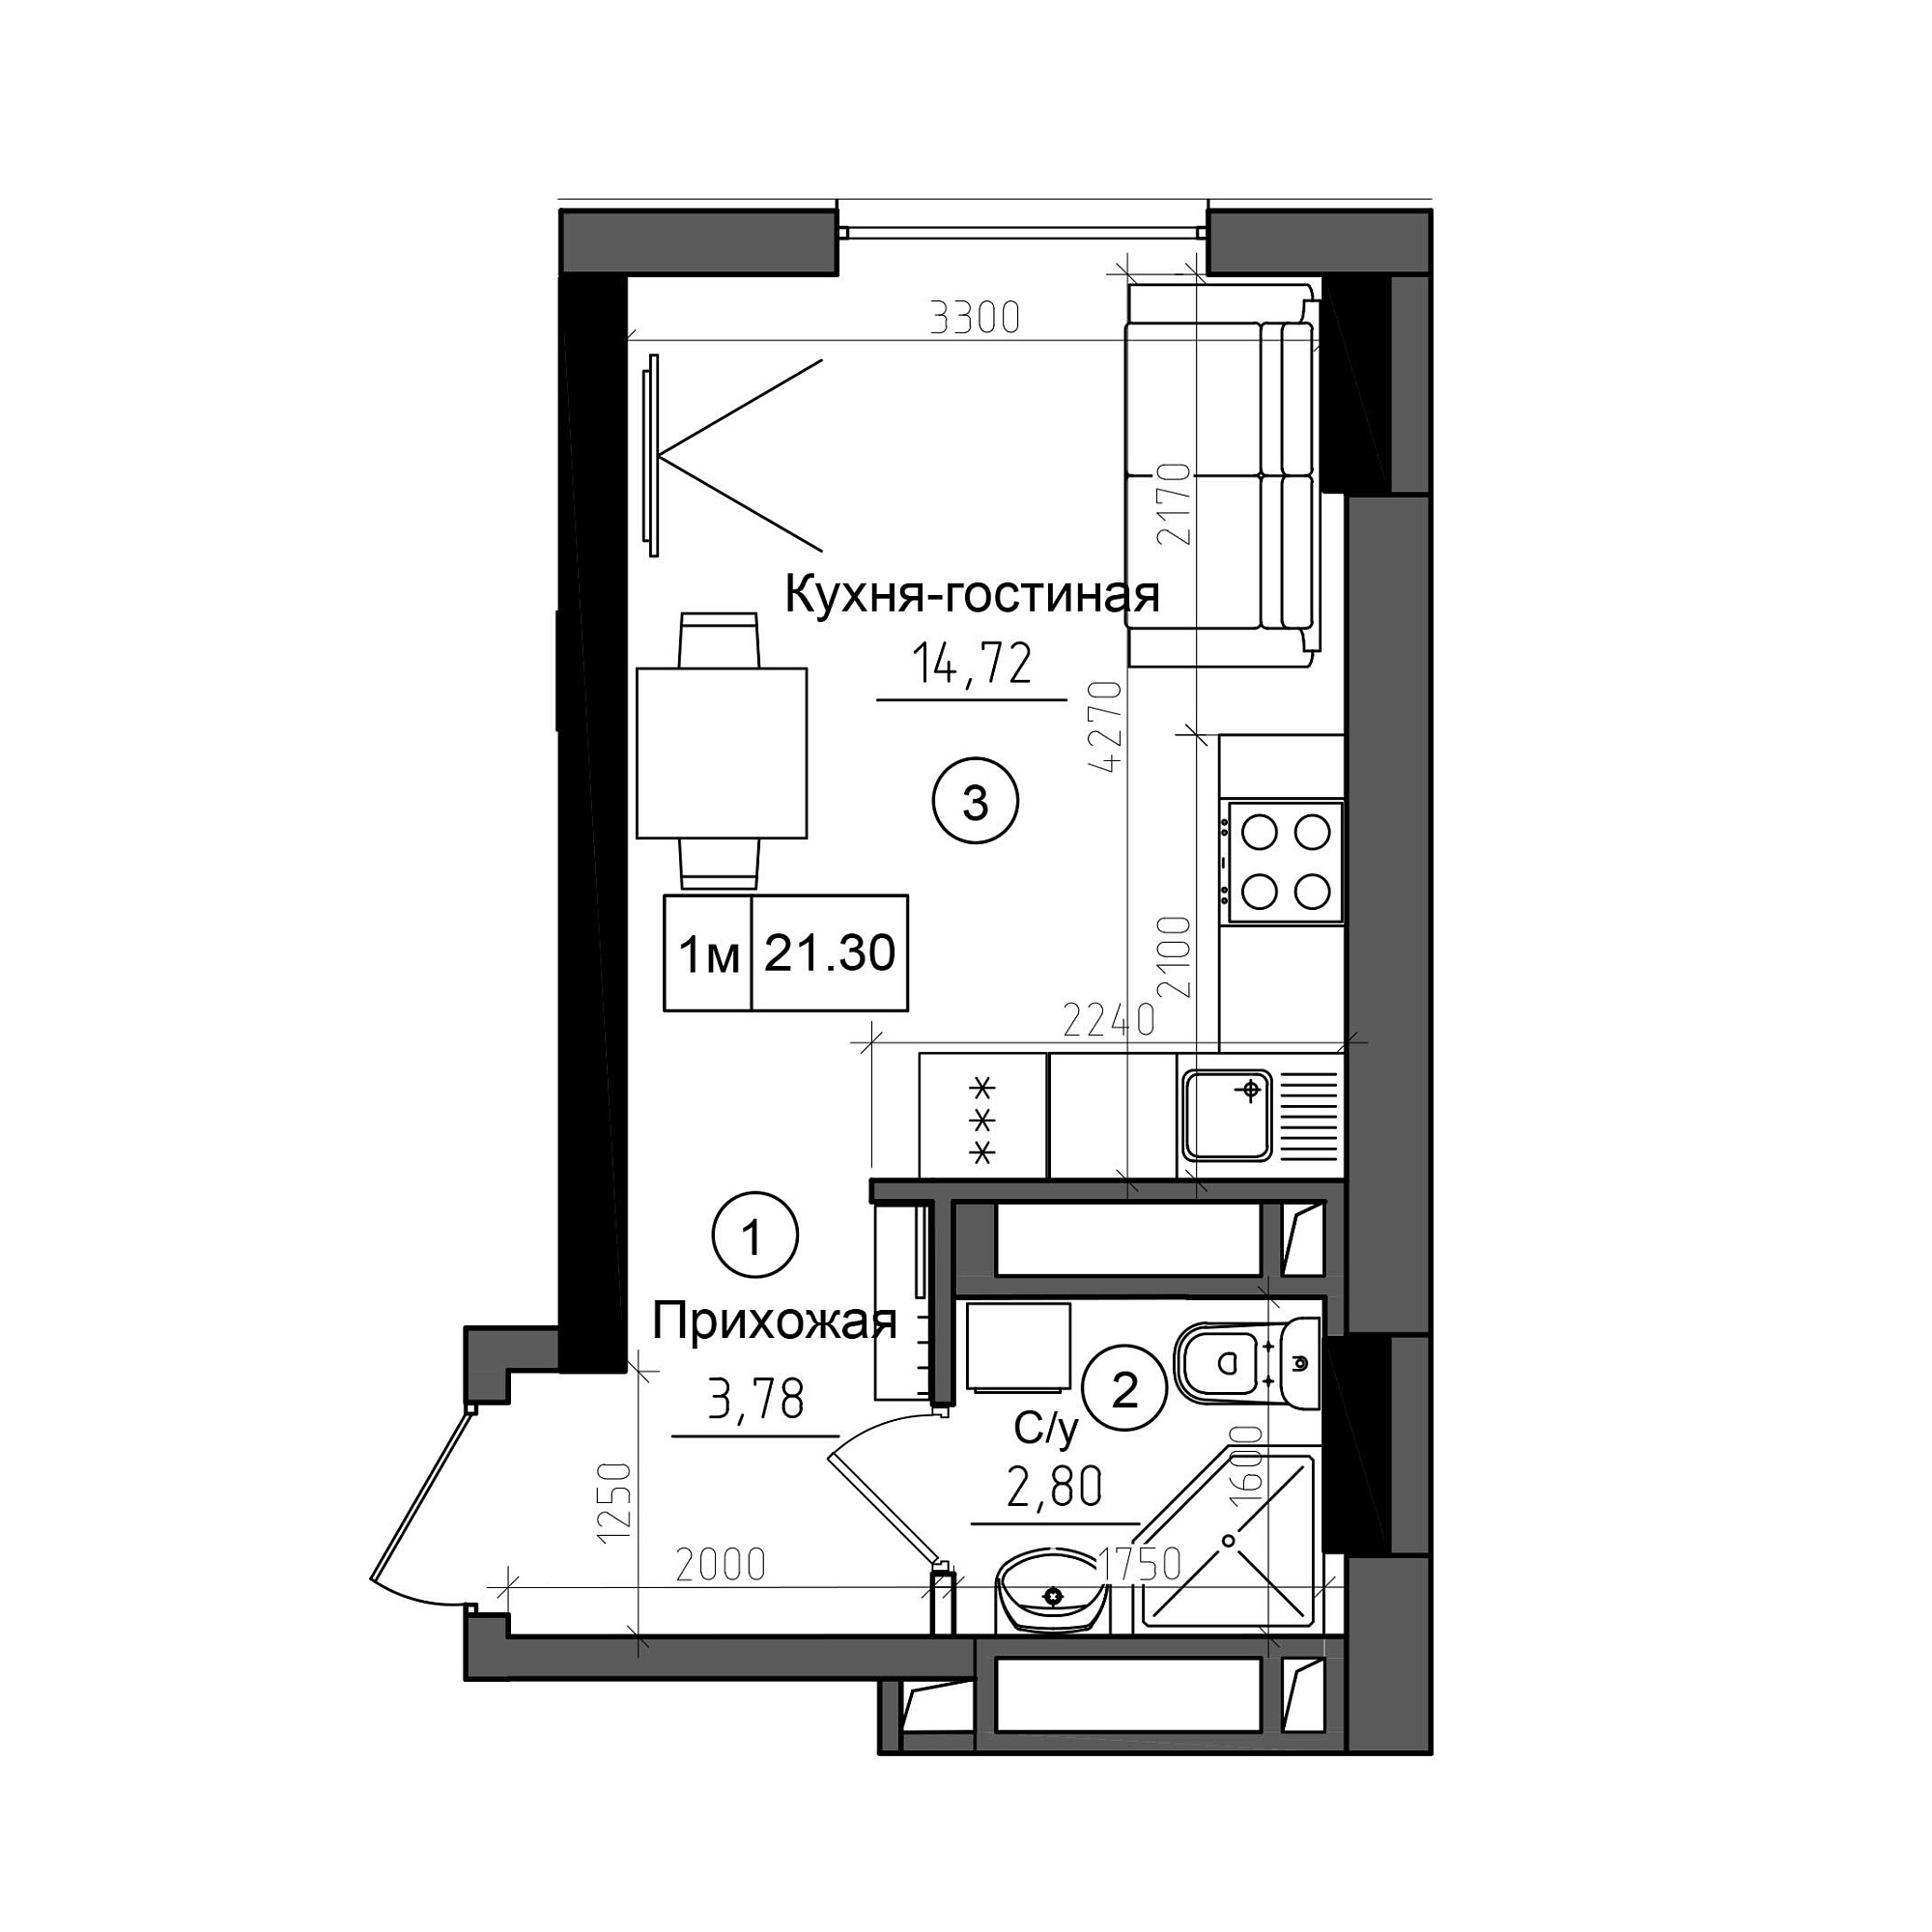 Planning Smart flats area 21.3m2, AB-20-07/0004а.